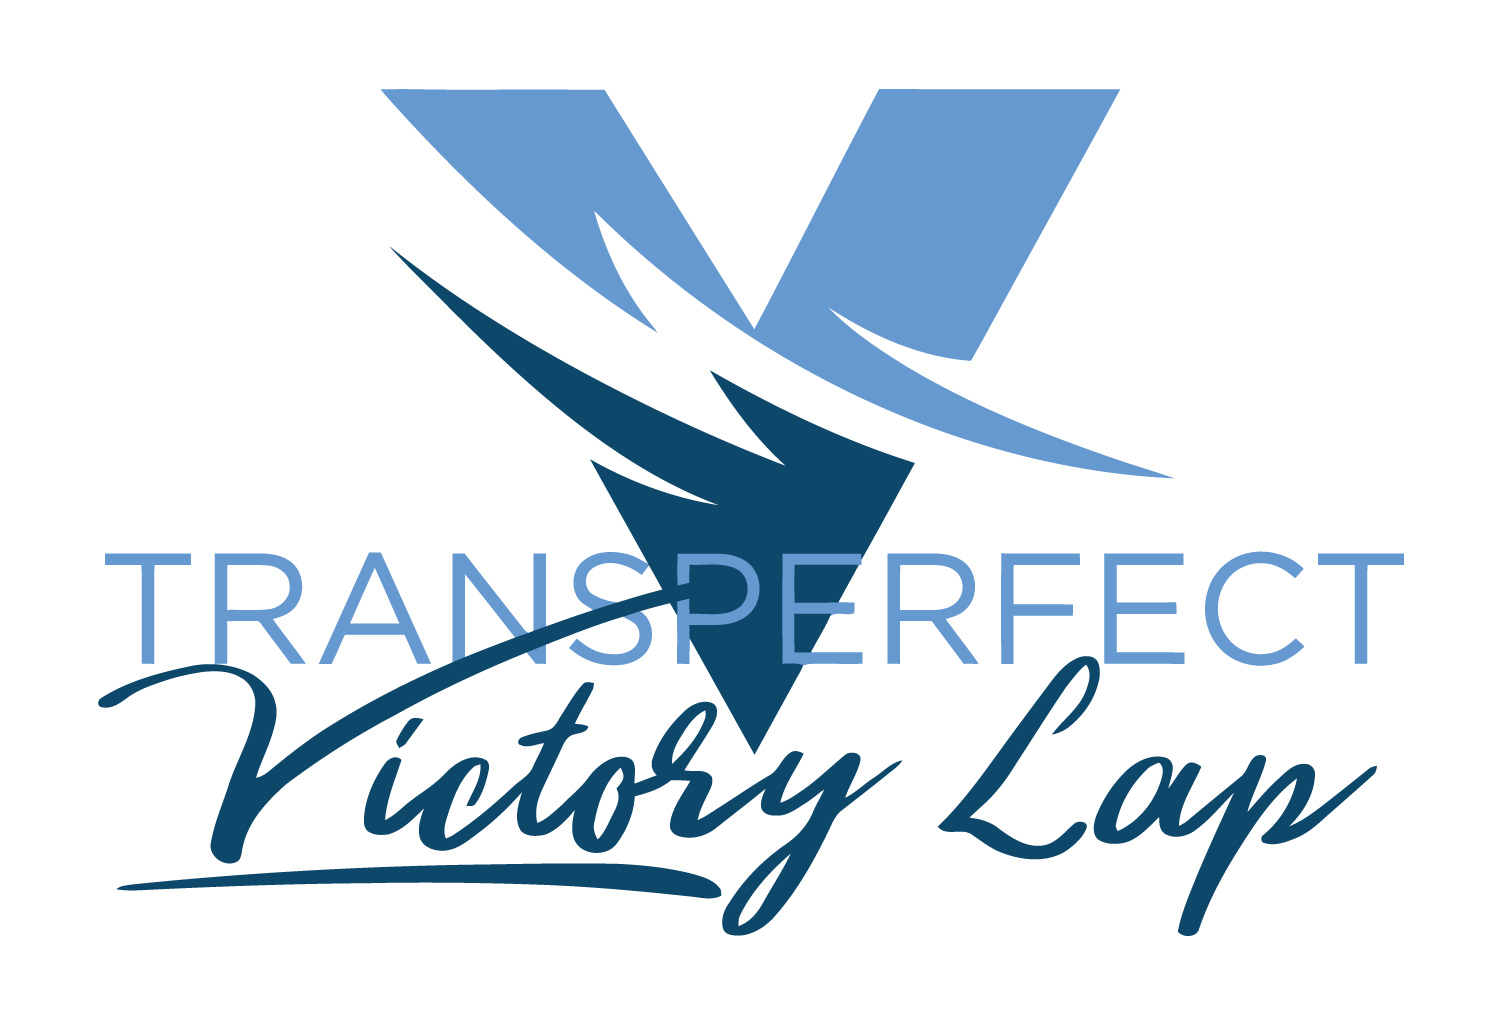 TransPerfect Victory Lap Philadelphia logo on RaceRaves